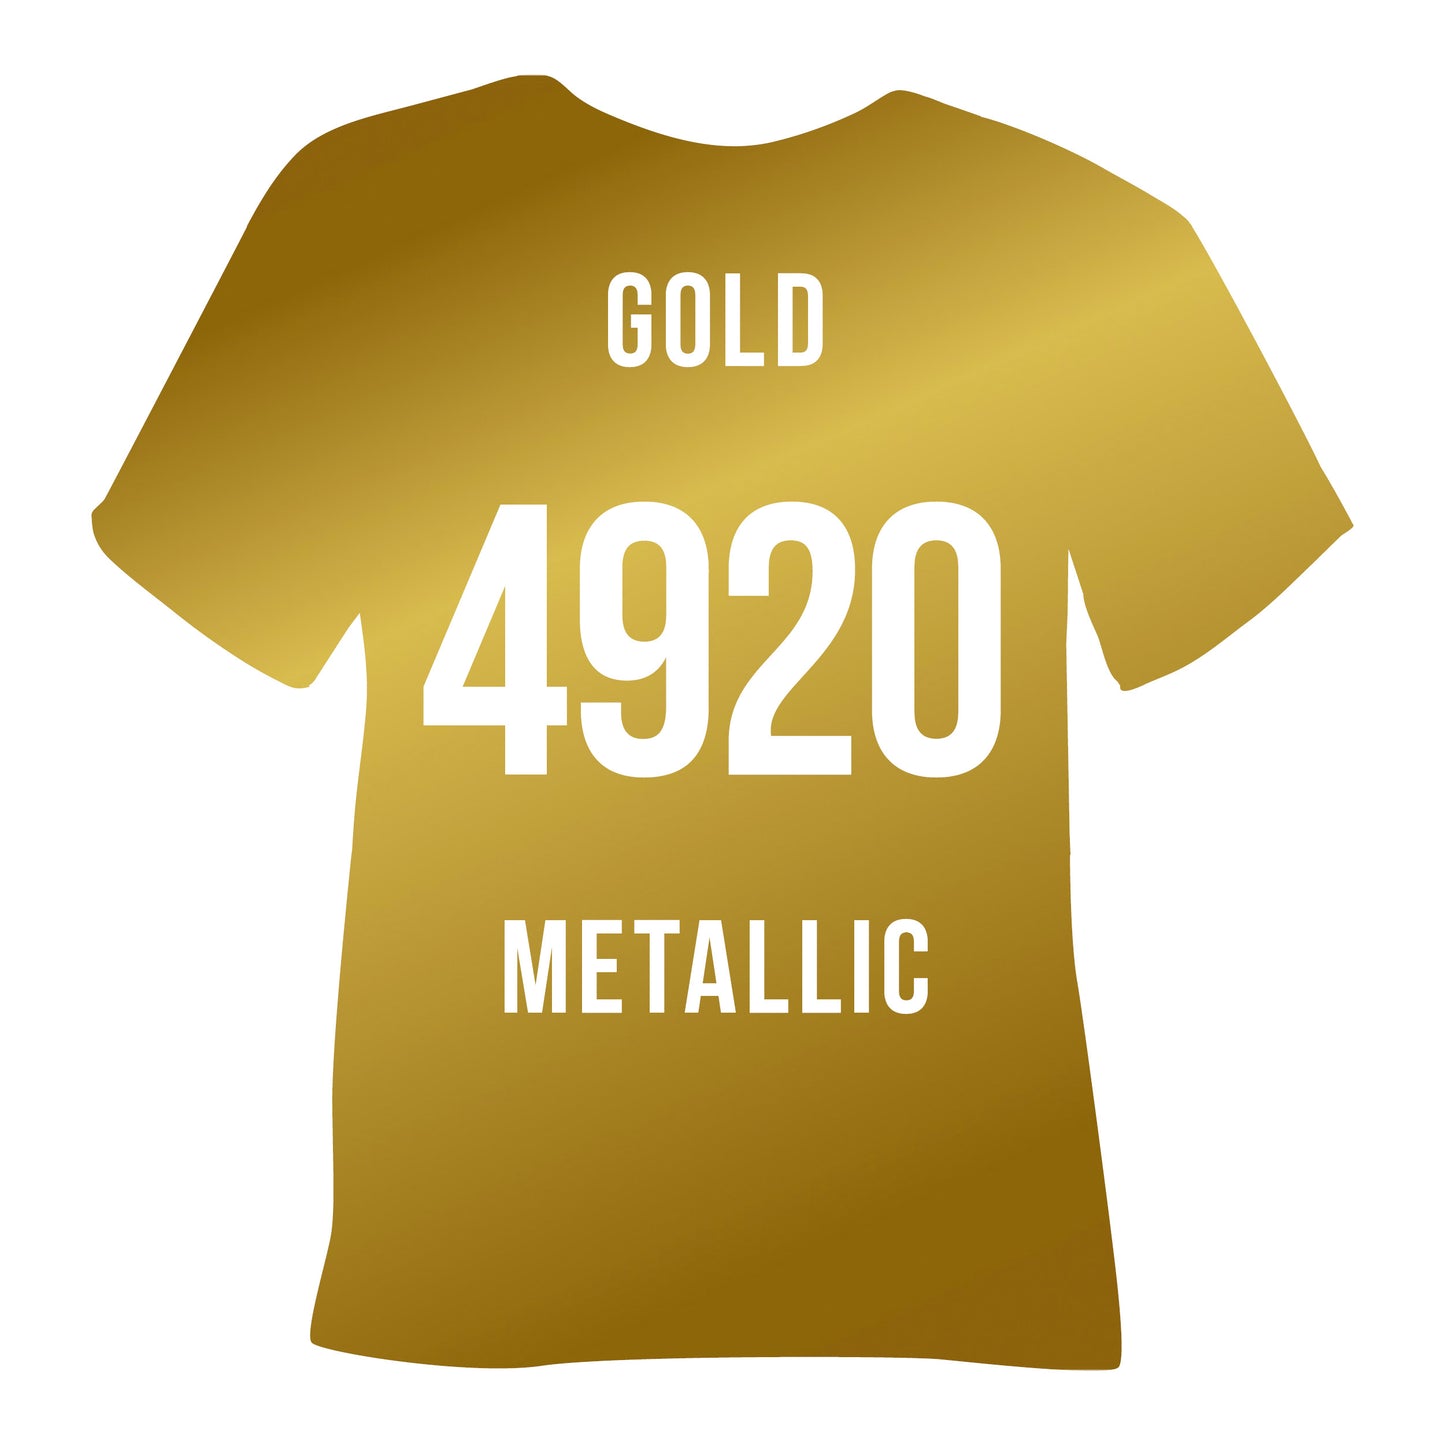 POLI-FLEX TURBO "GOLD METALLIC" 4920 A4 FORMATWARE